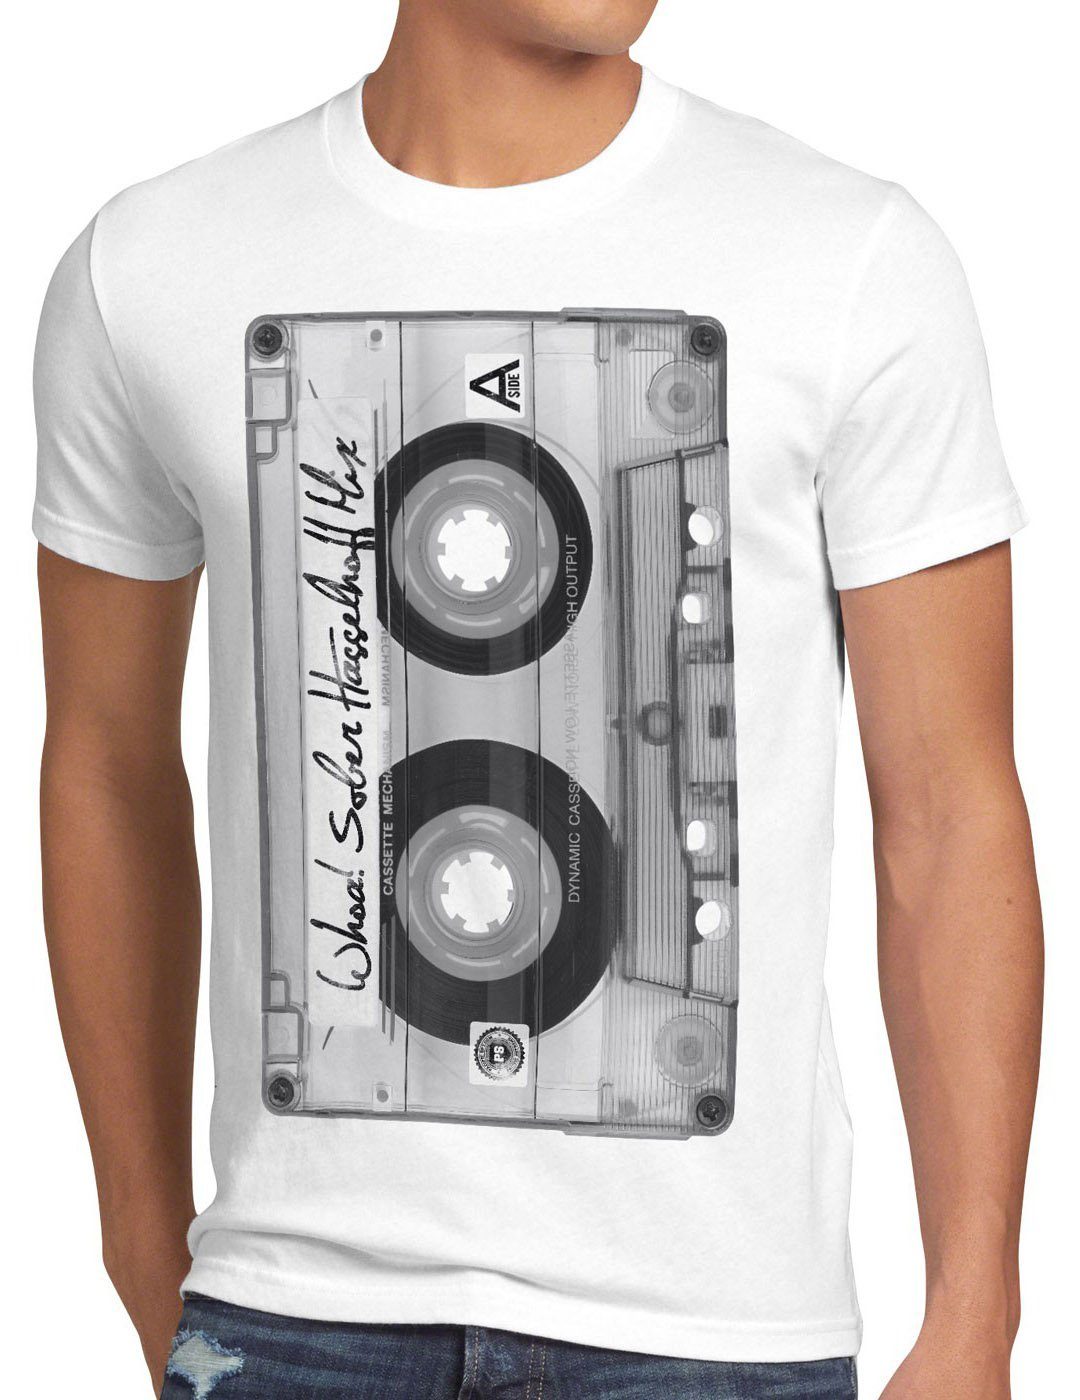 style3 Print-Shirt Herren T-Shirt DJ Kassetten fotodruck mc musik disco 80er 90er retro S M L XL XXL XXXL weiß